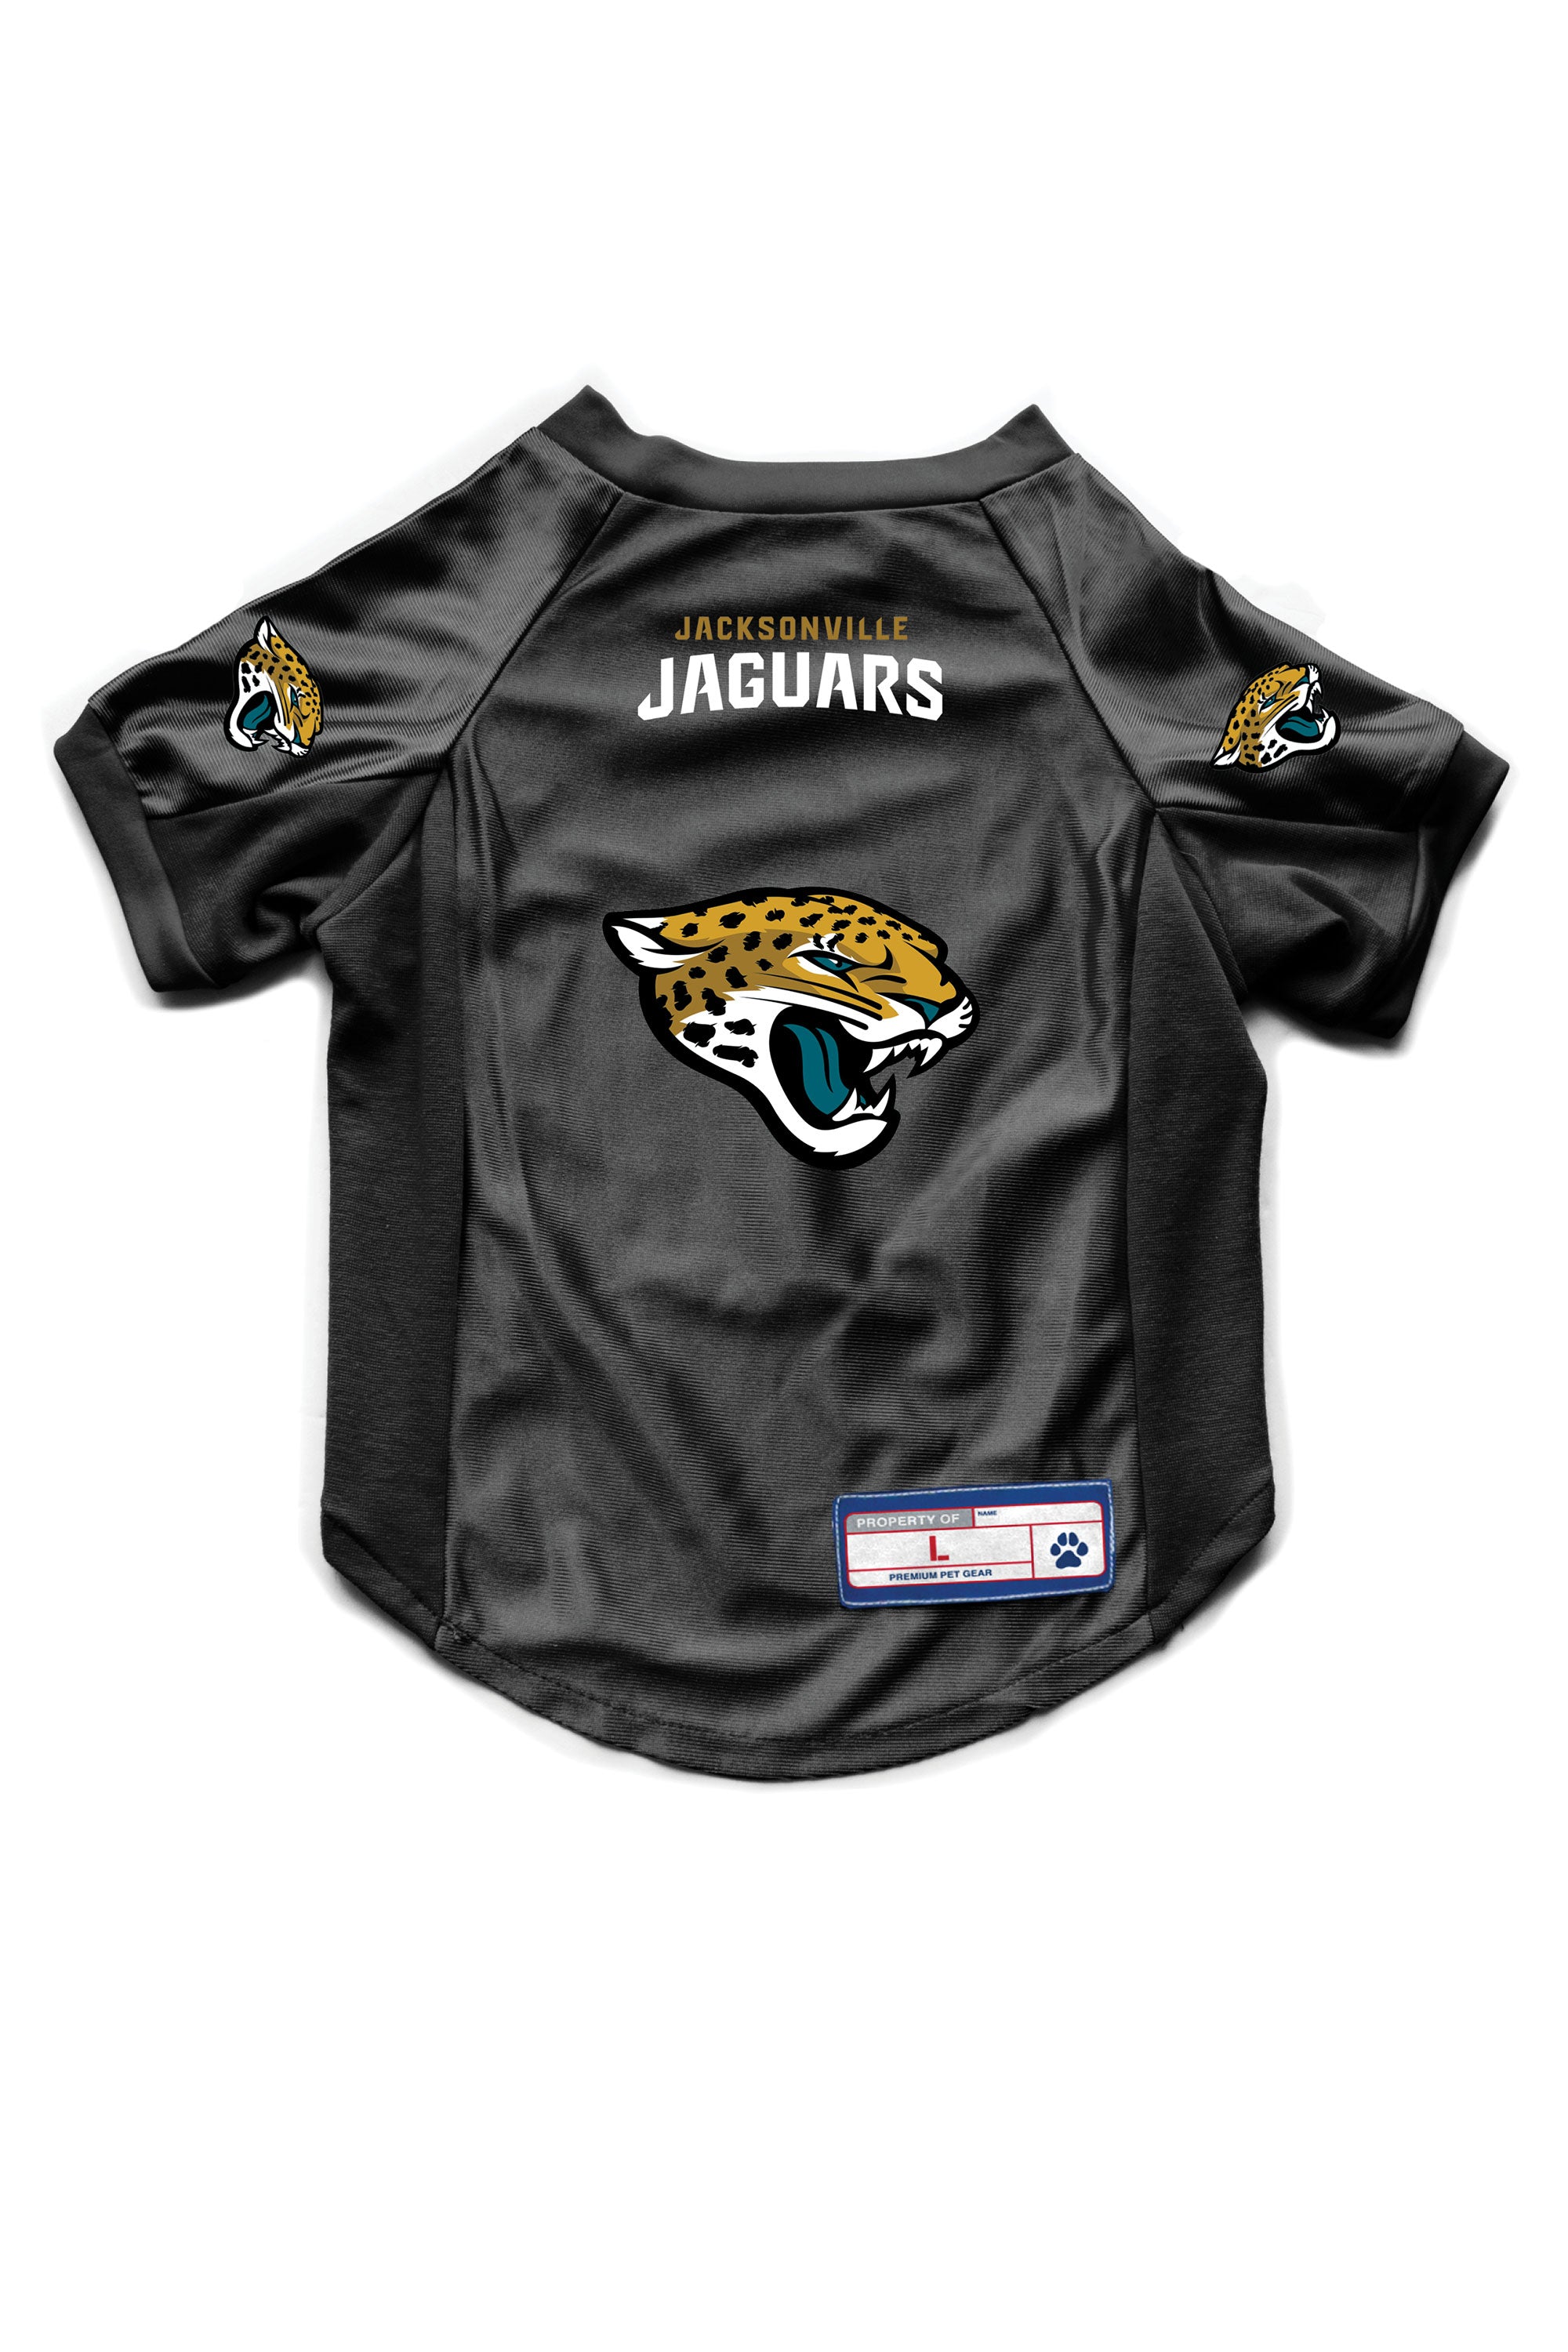 jacksonville jaguars jersey